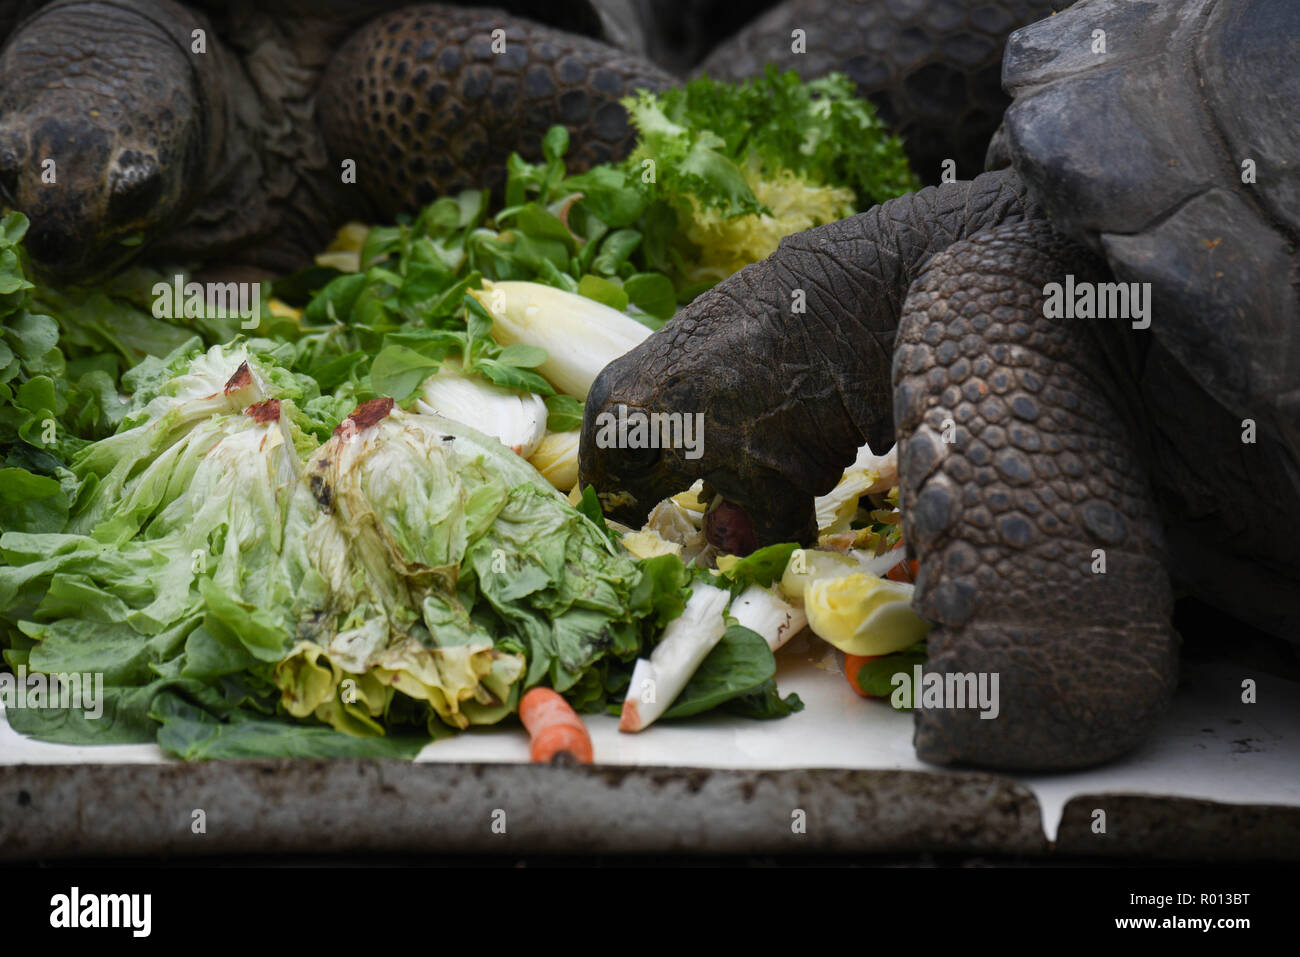 October 26, 2018 - Paris, France: Turtles eat salads at the zoo of the French National Museum of Natural History. Des tortues des Seychelles mangent leur repas, de la salade, a la menagerie du Jardin des Plantes. *** FRANCE OUT / NO SALES TO FRENCH MEDIA *** Stock Photo